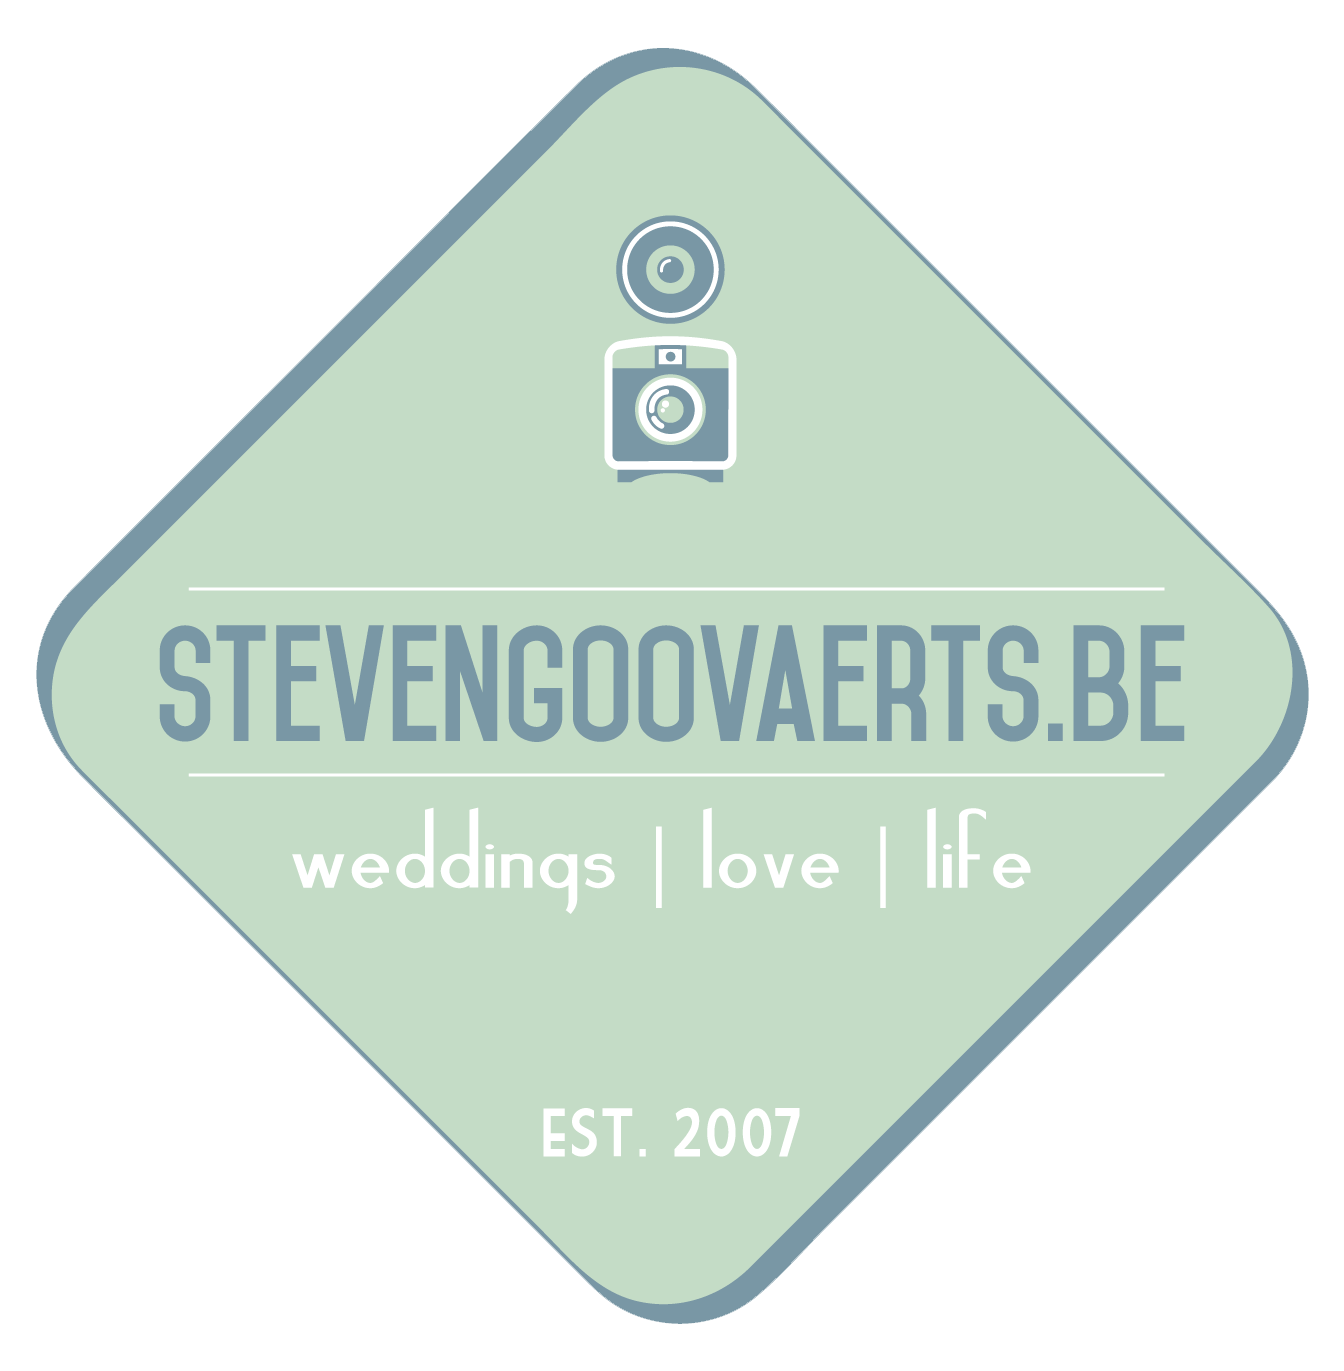 (c) Stevengoovaerts.be